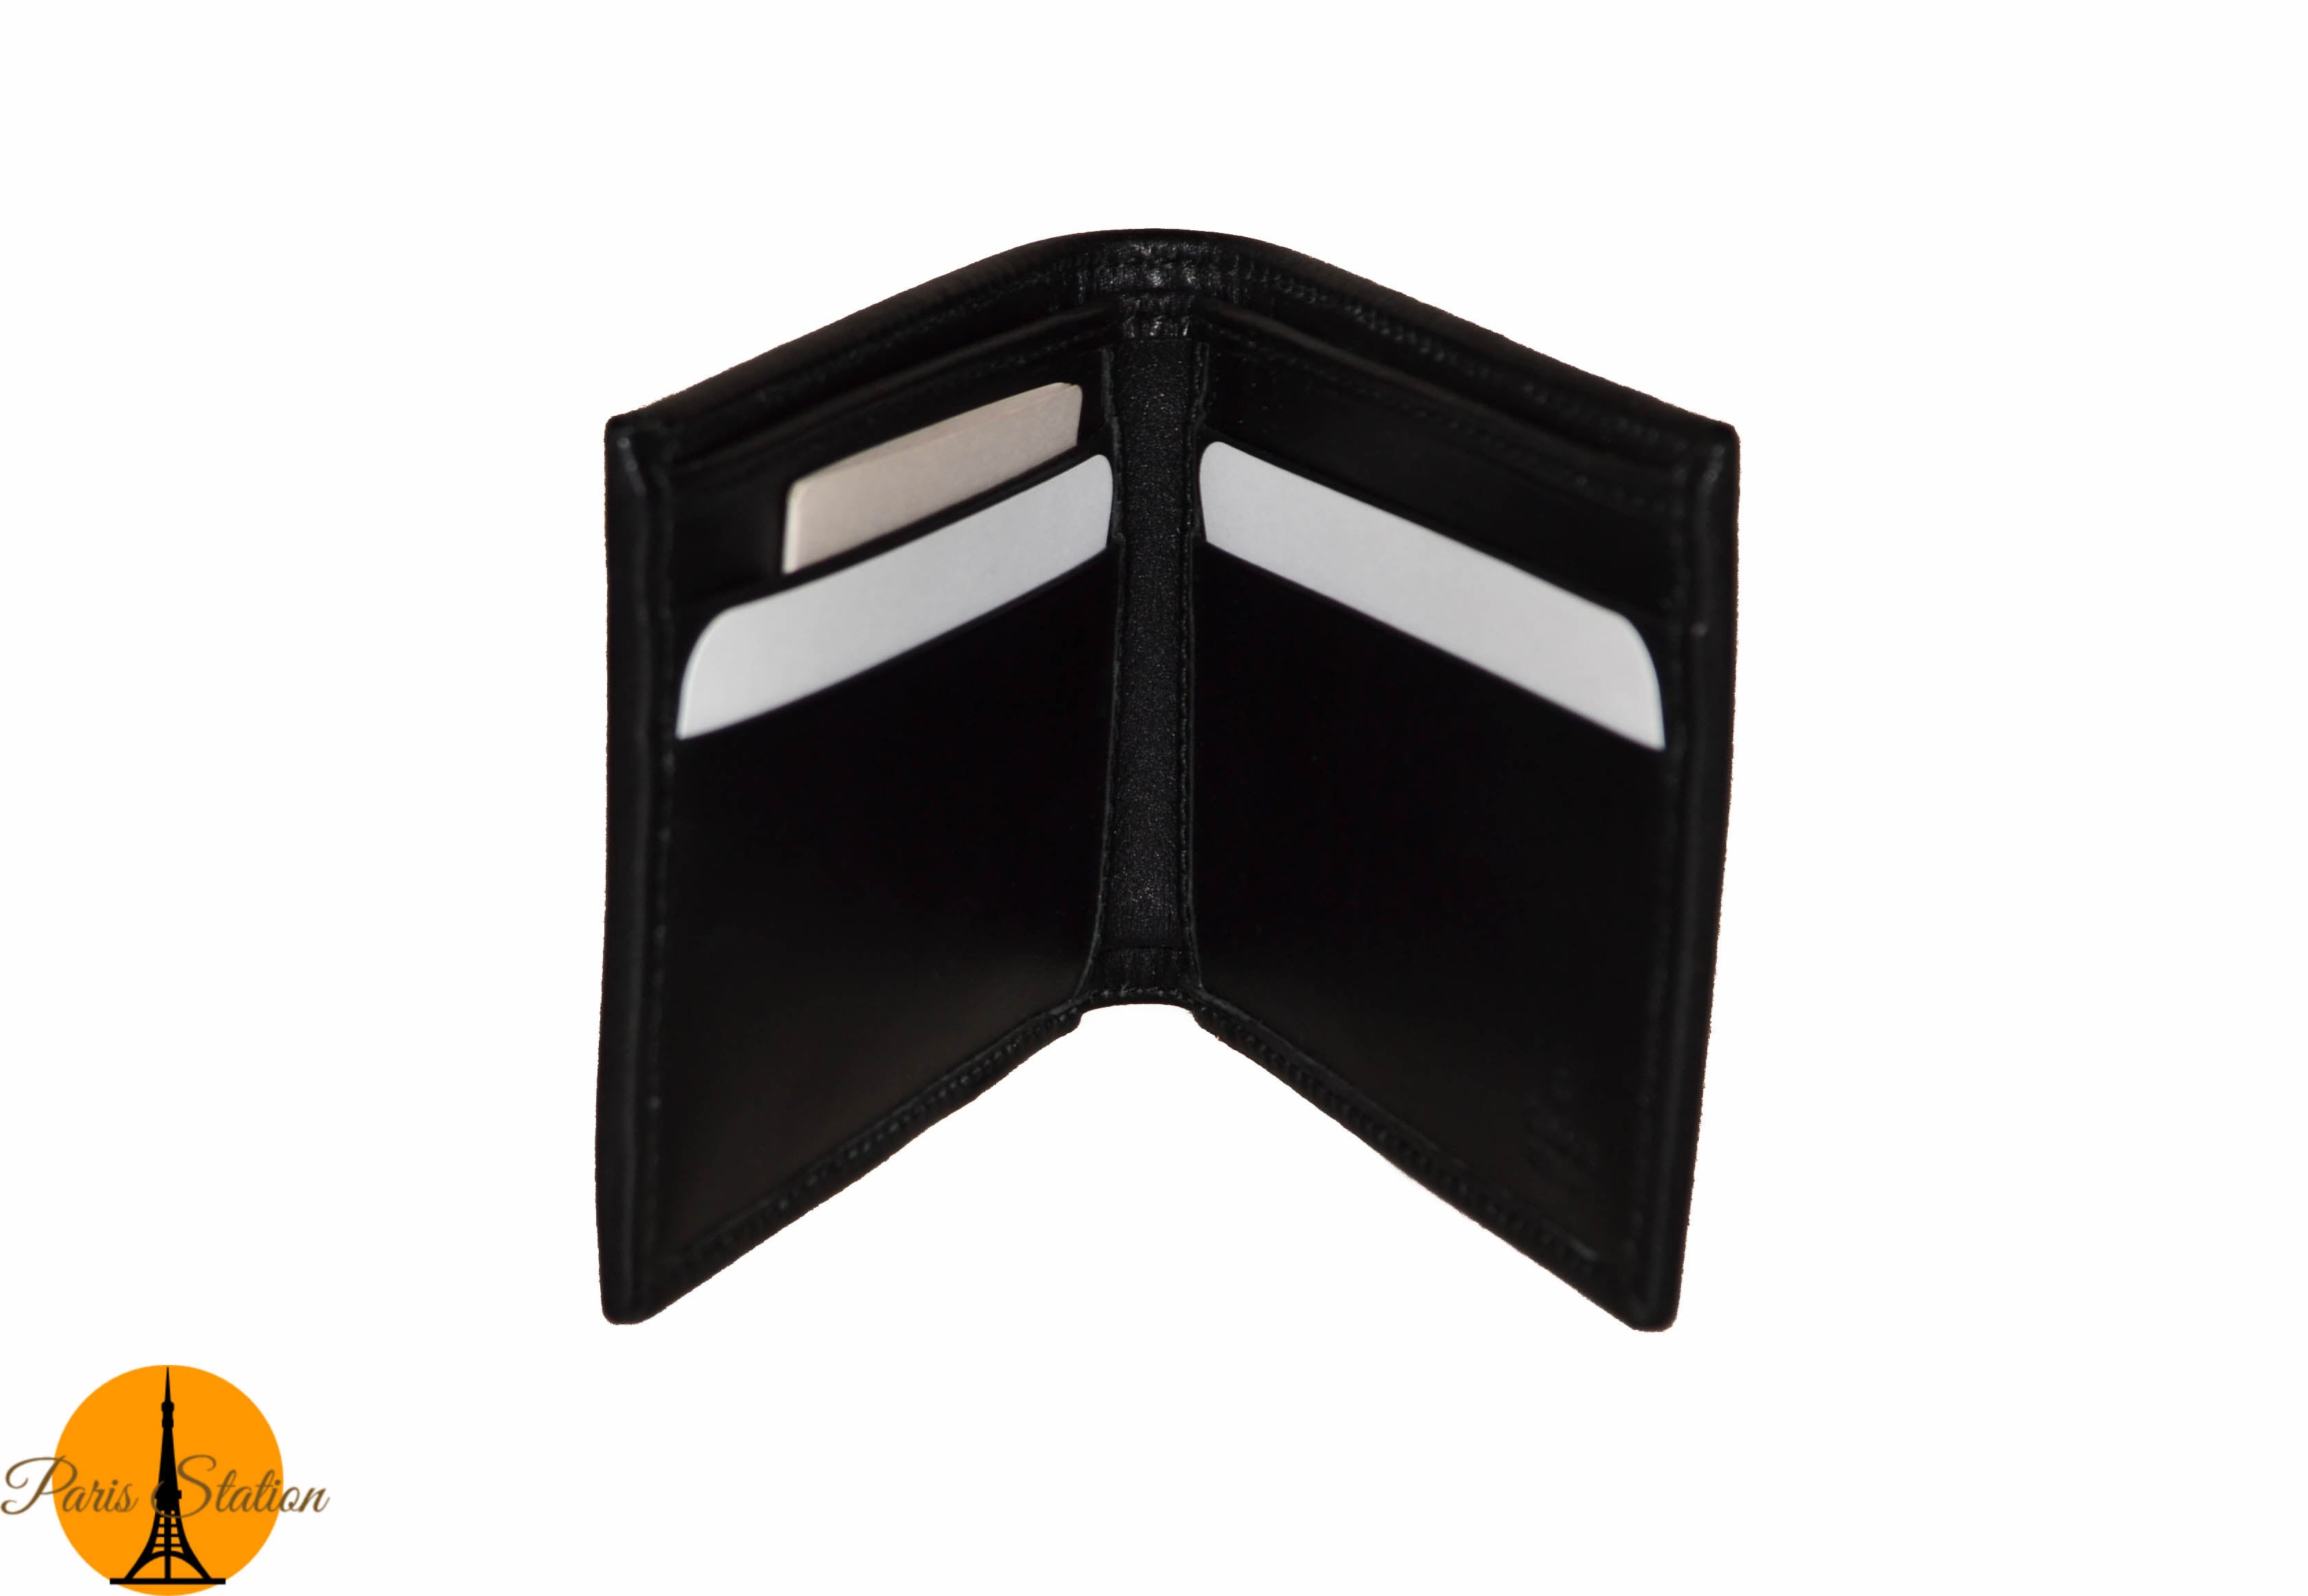 Authentic NEW Gucci Black Canvas Bi-Fold Men's Wallet 233157